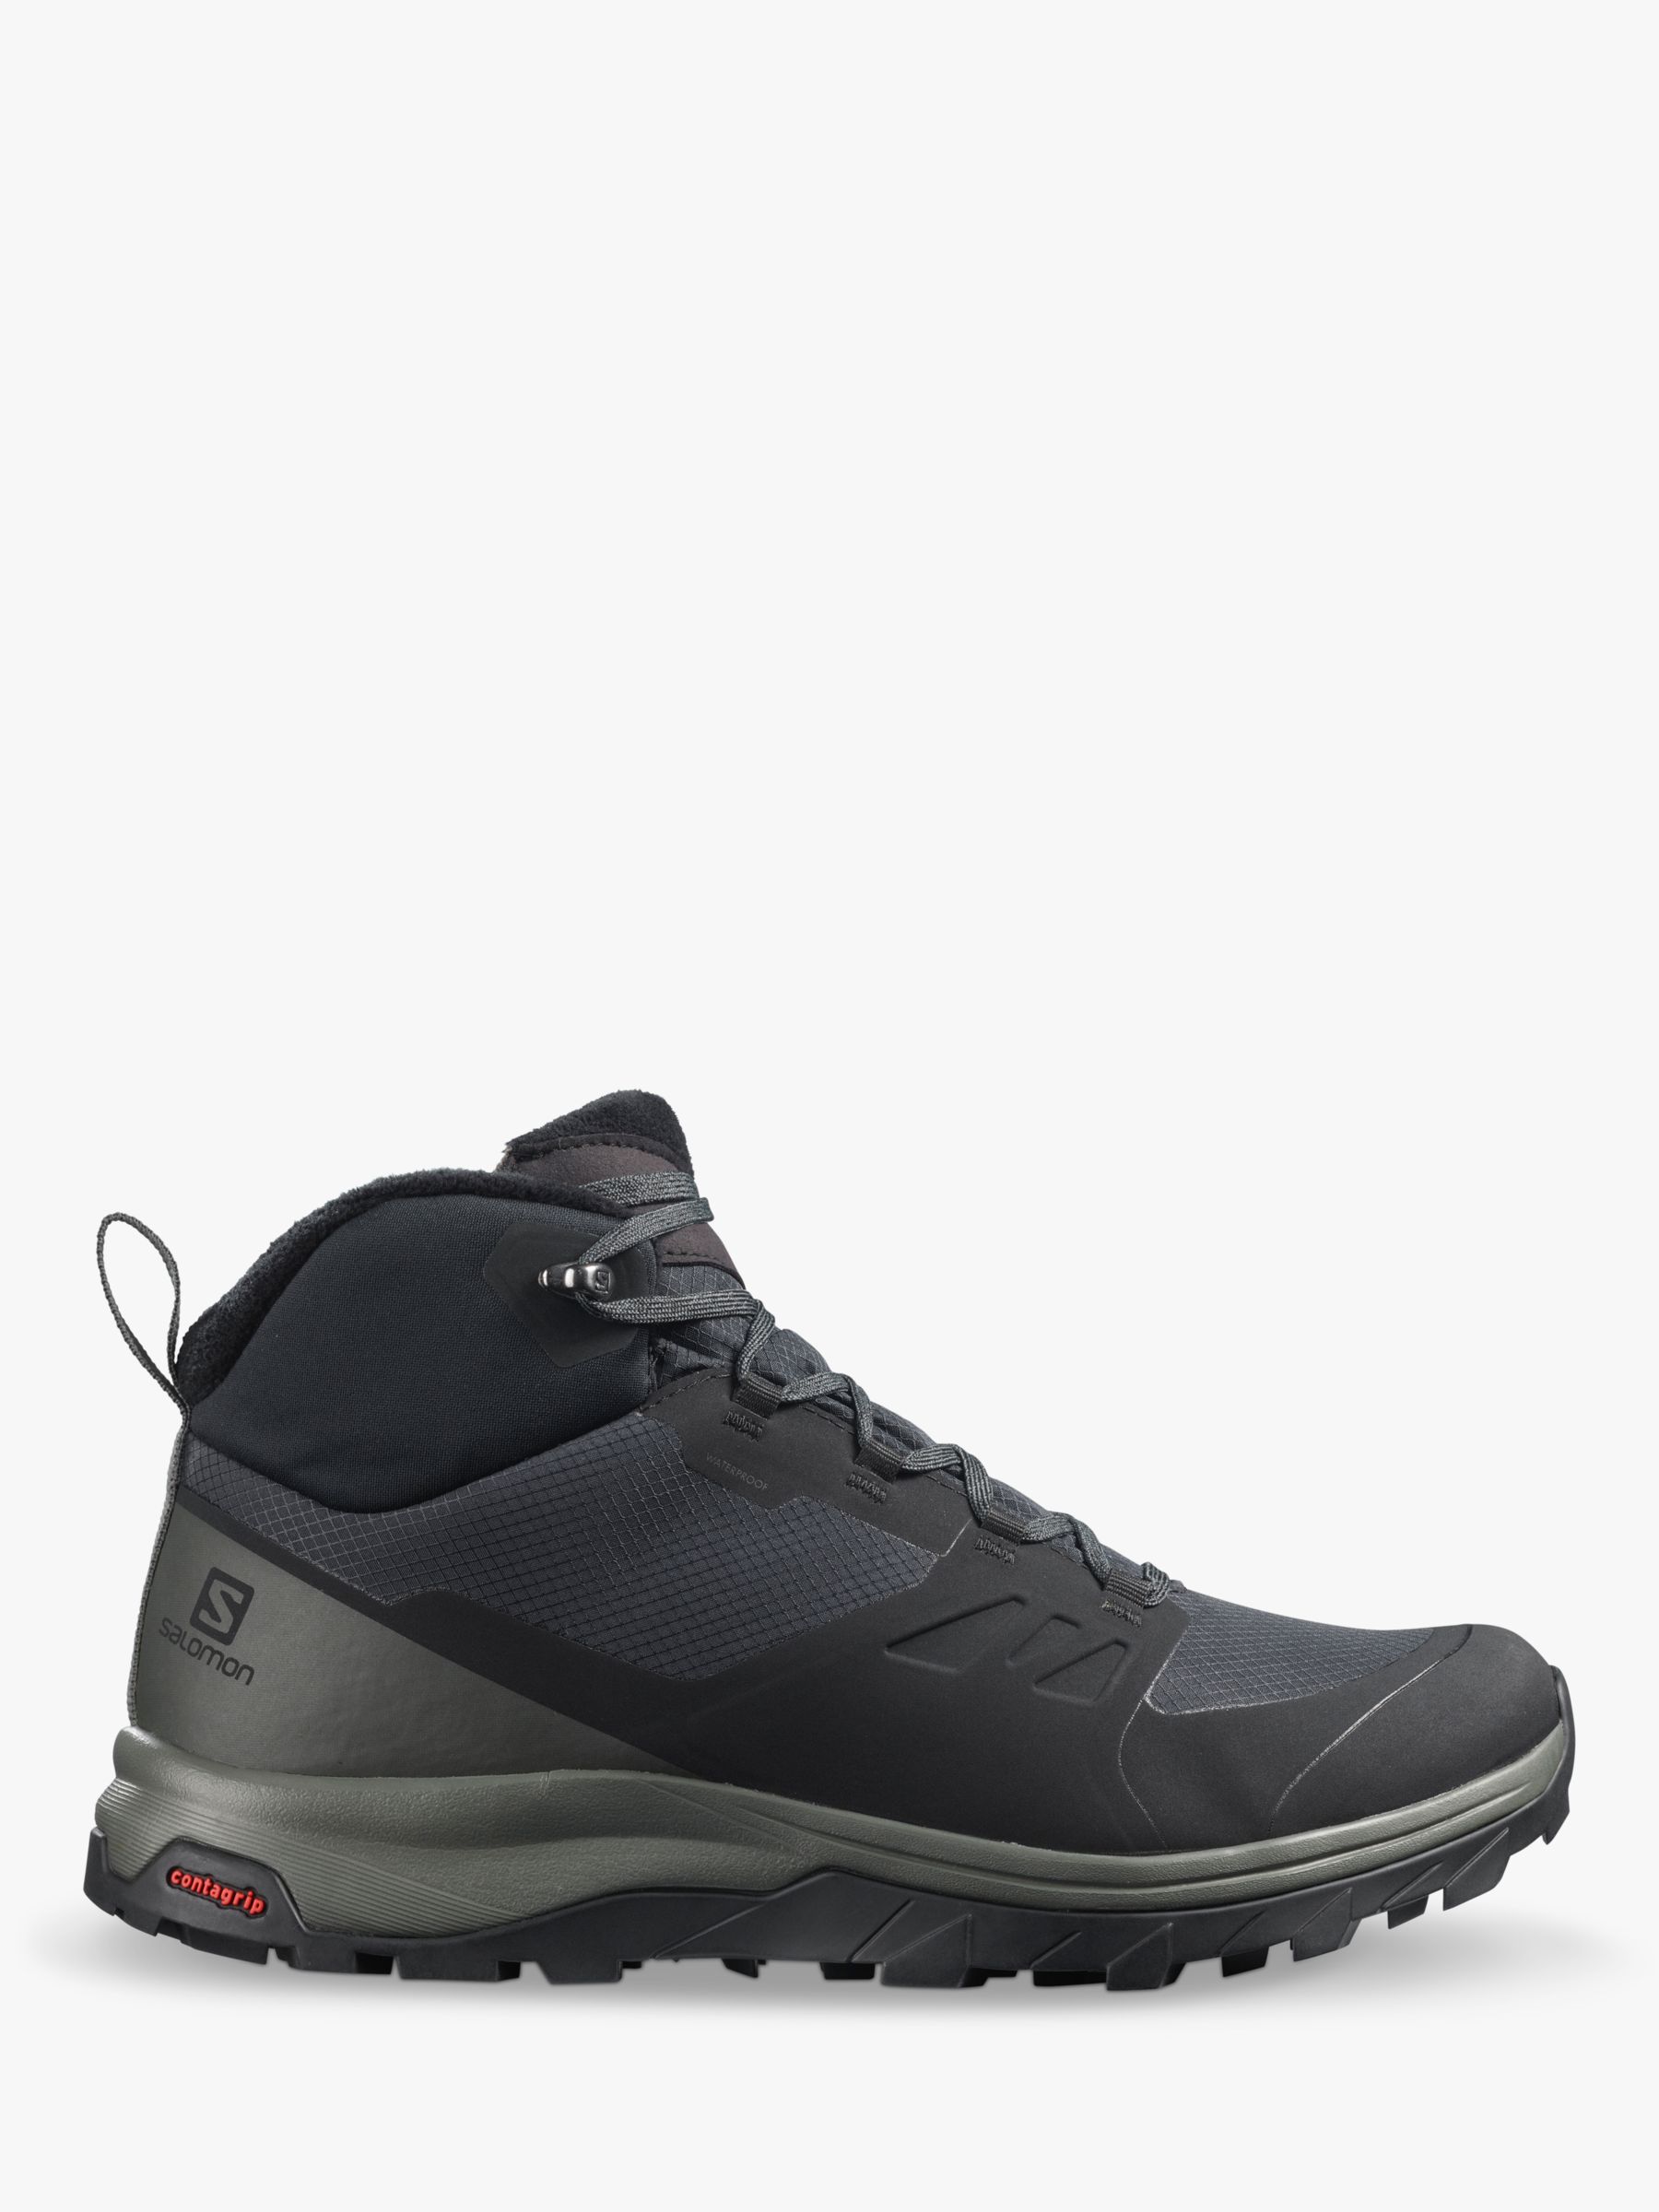 Salomon CSWP Men's Hiking Boots John Lewis & Partners